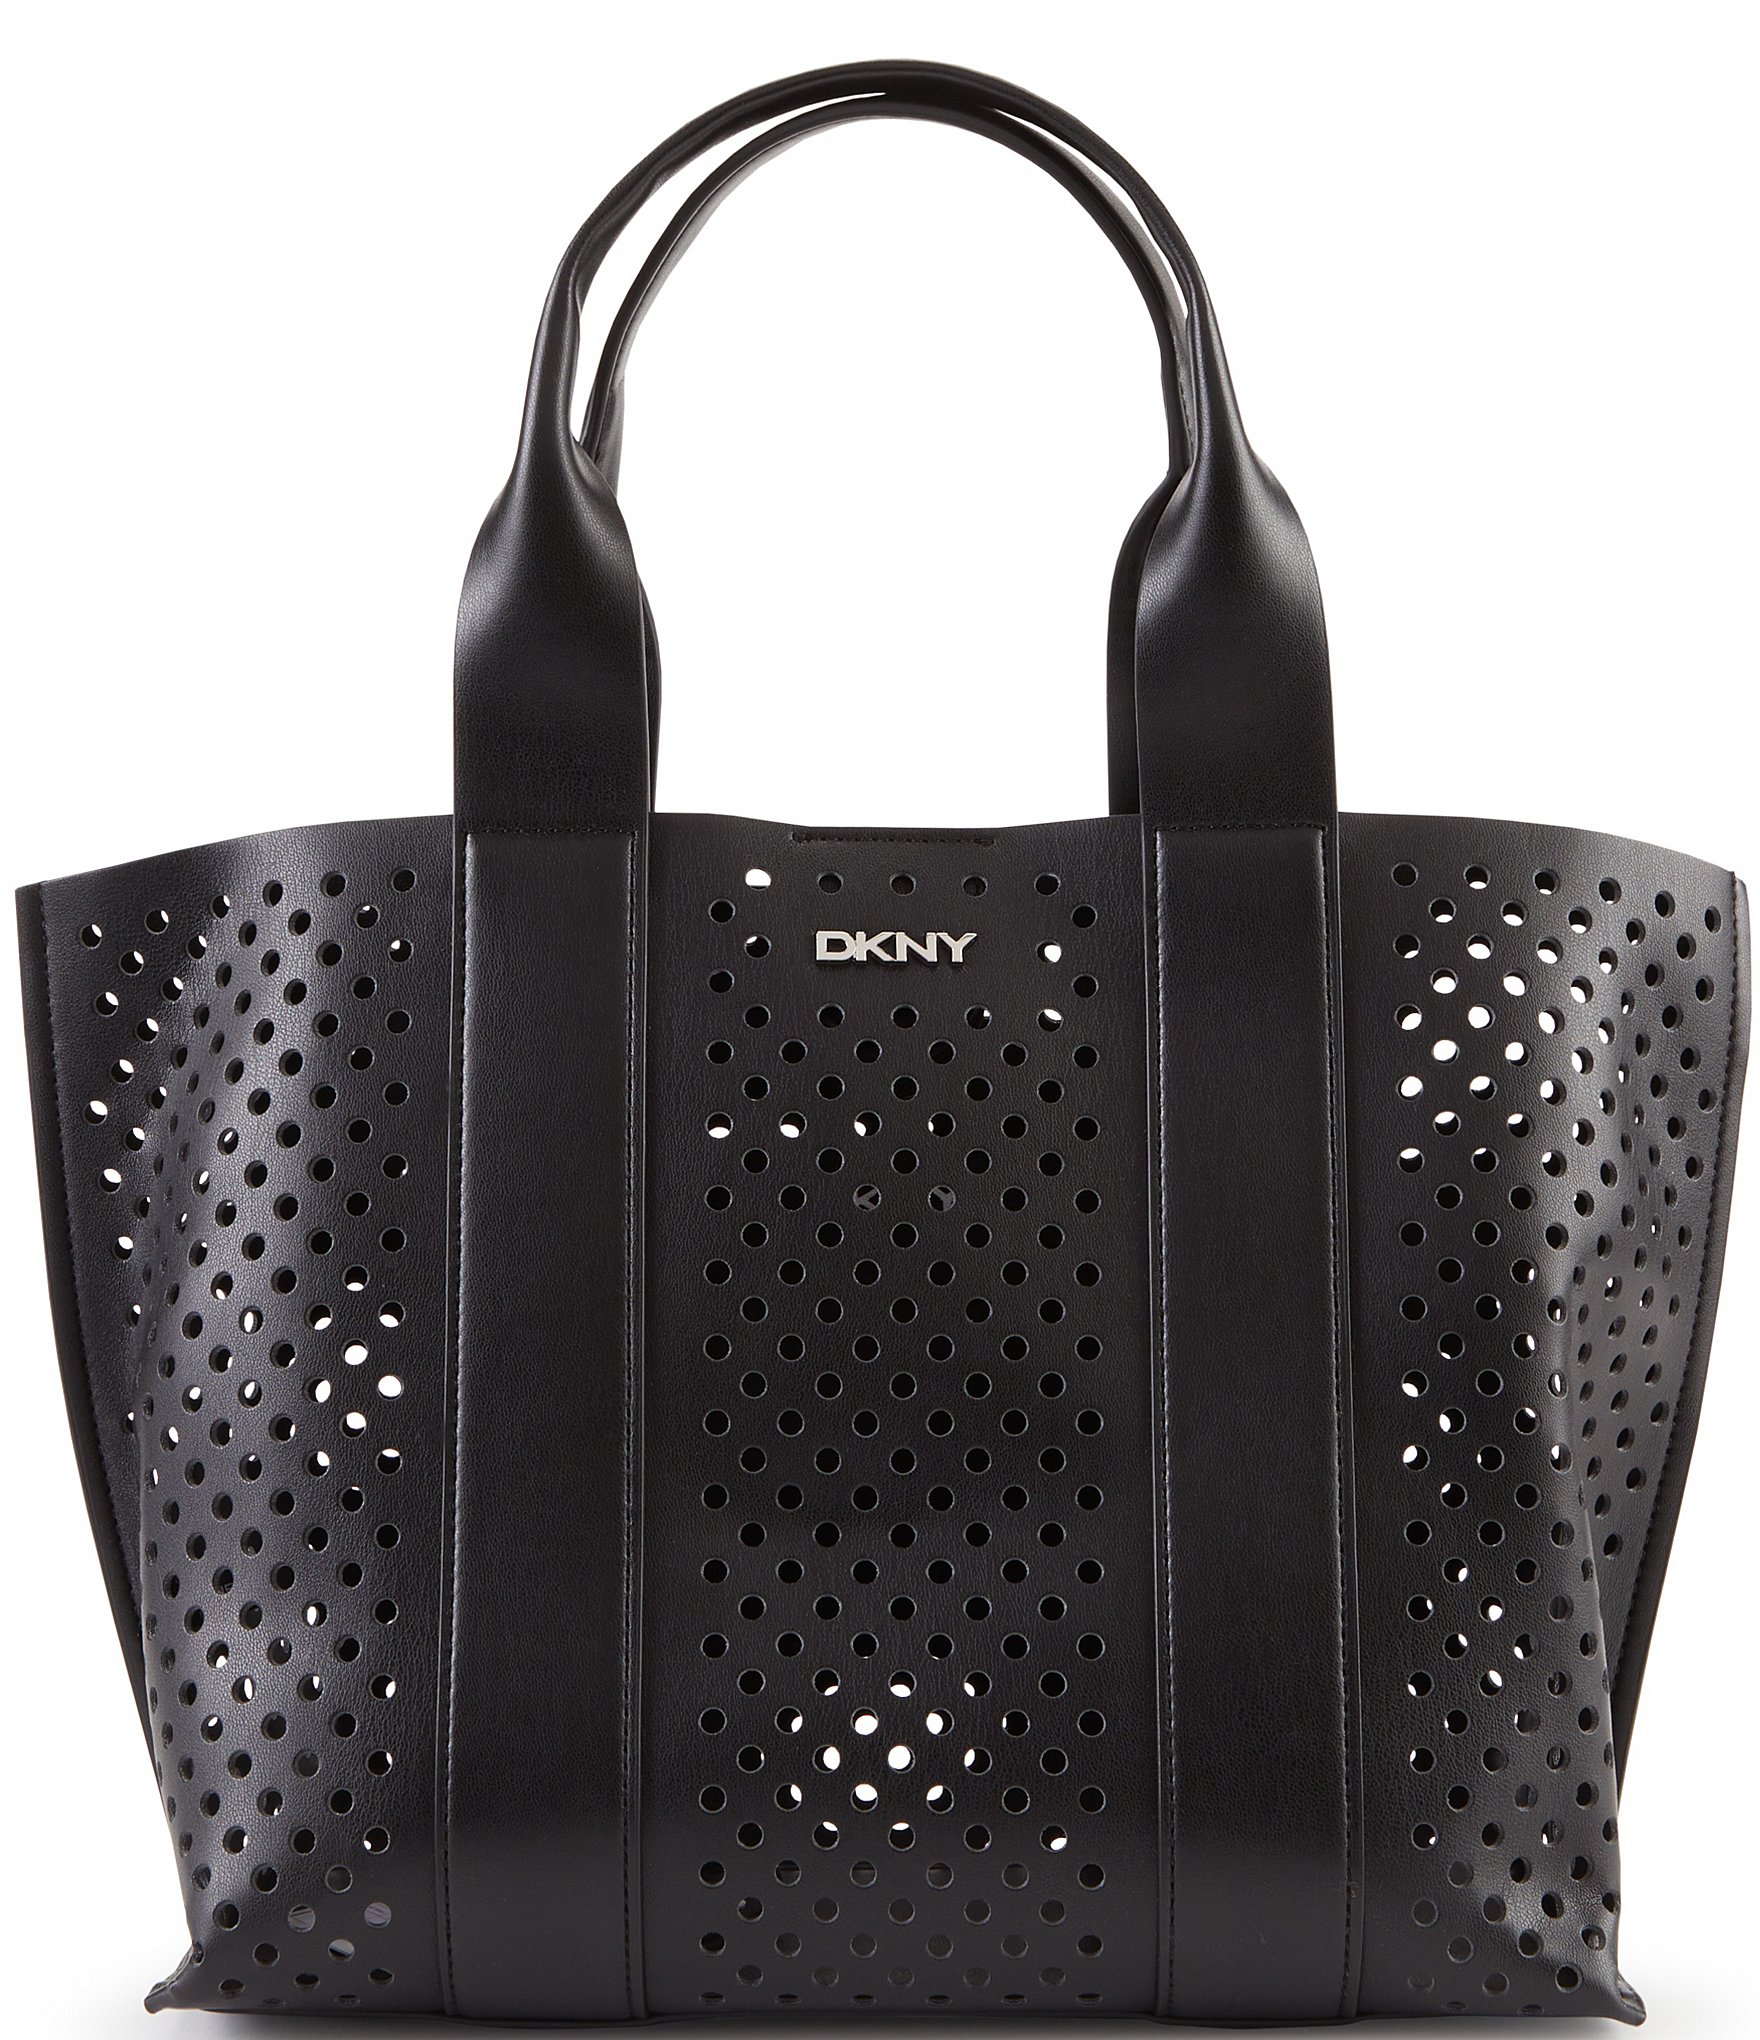 DKNY Black Leather Purse | Black leather purse, Leather purses, Purses